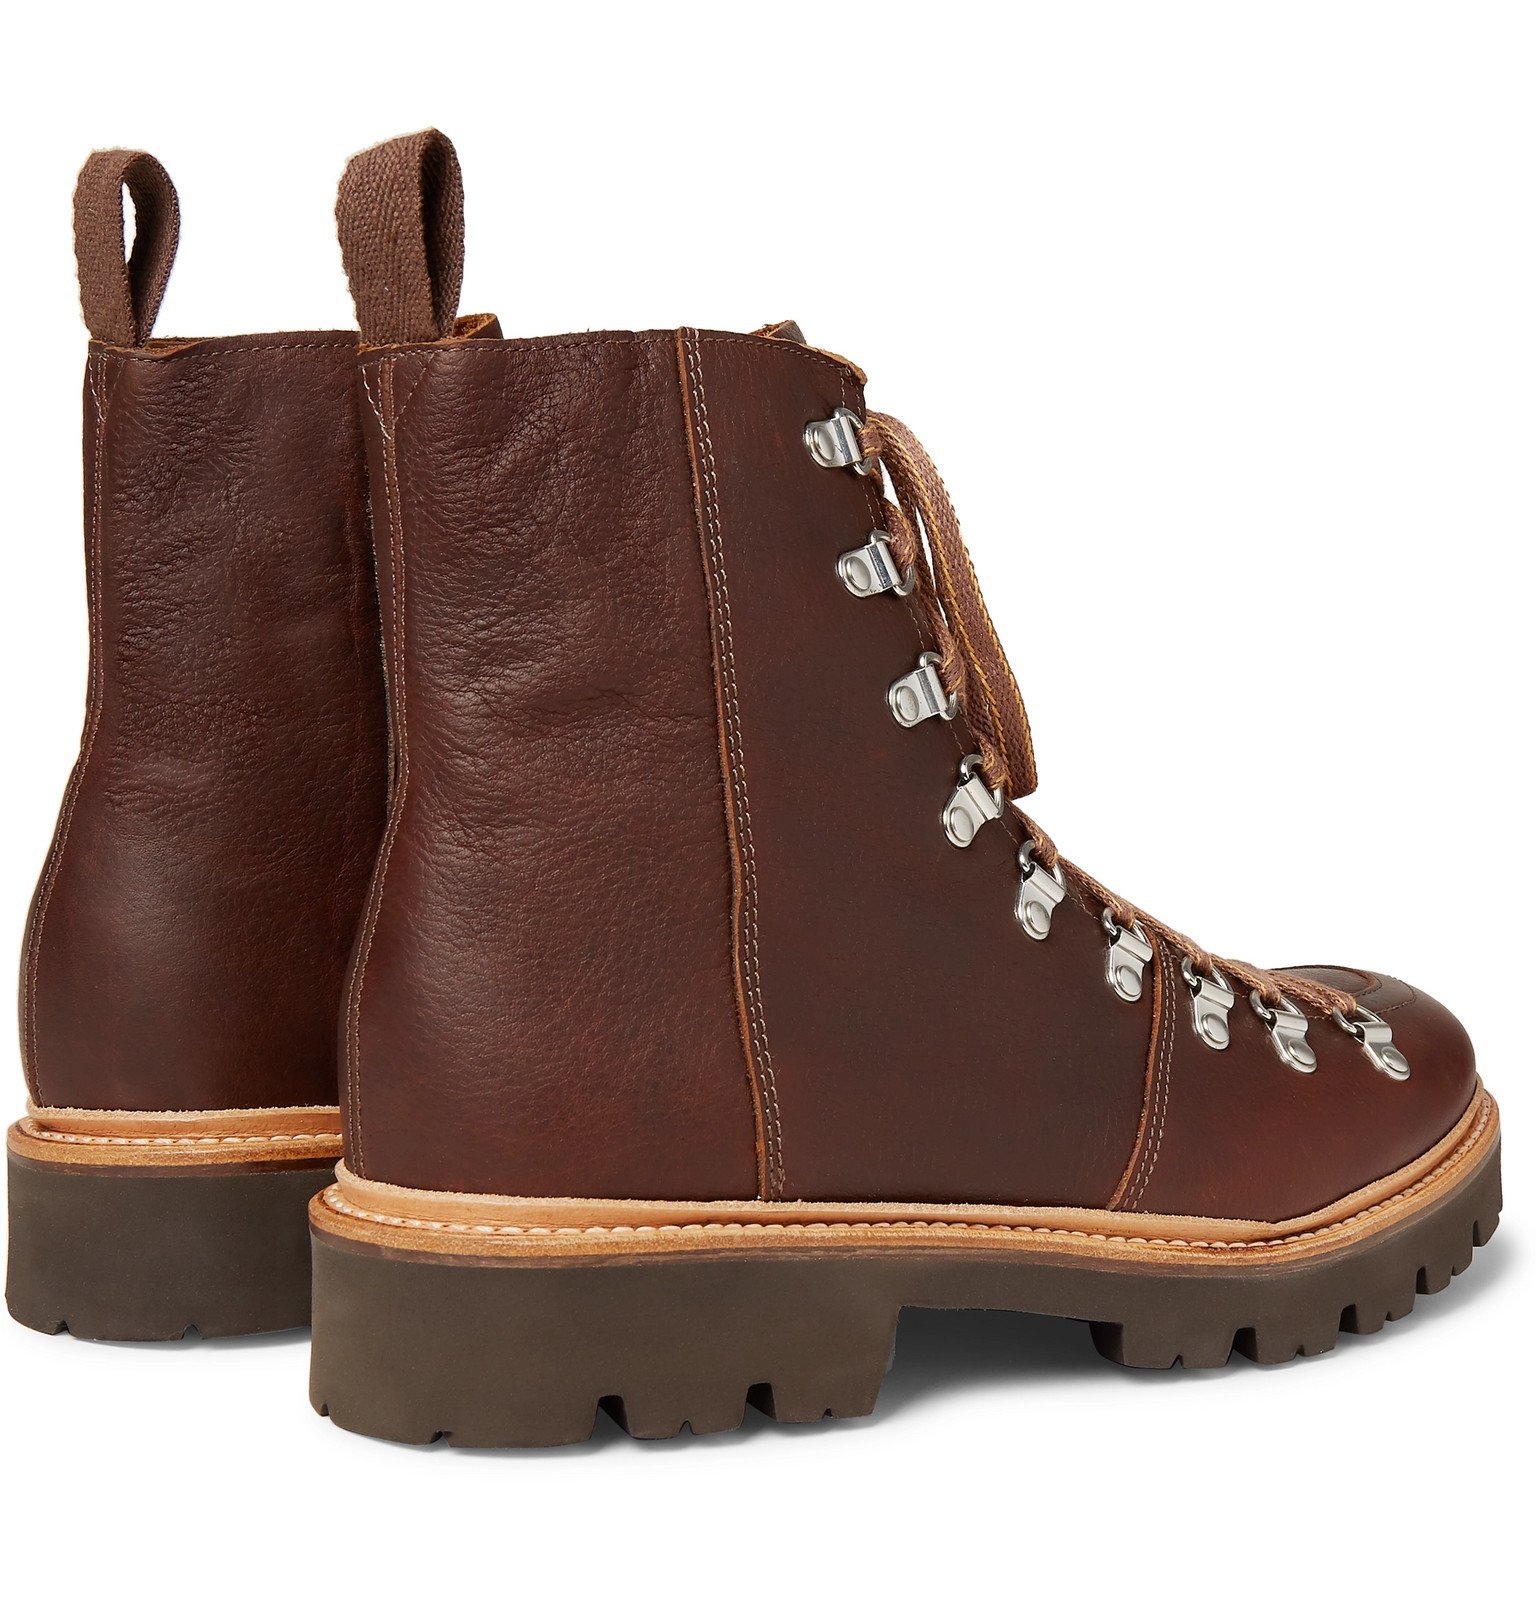 Grenson - Brady Full-Grain Leather Boots - Brown Grenson